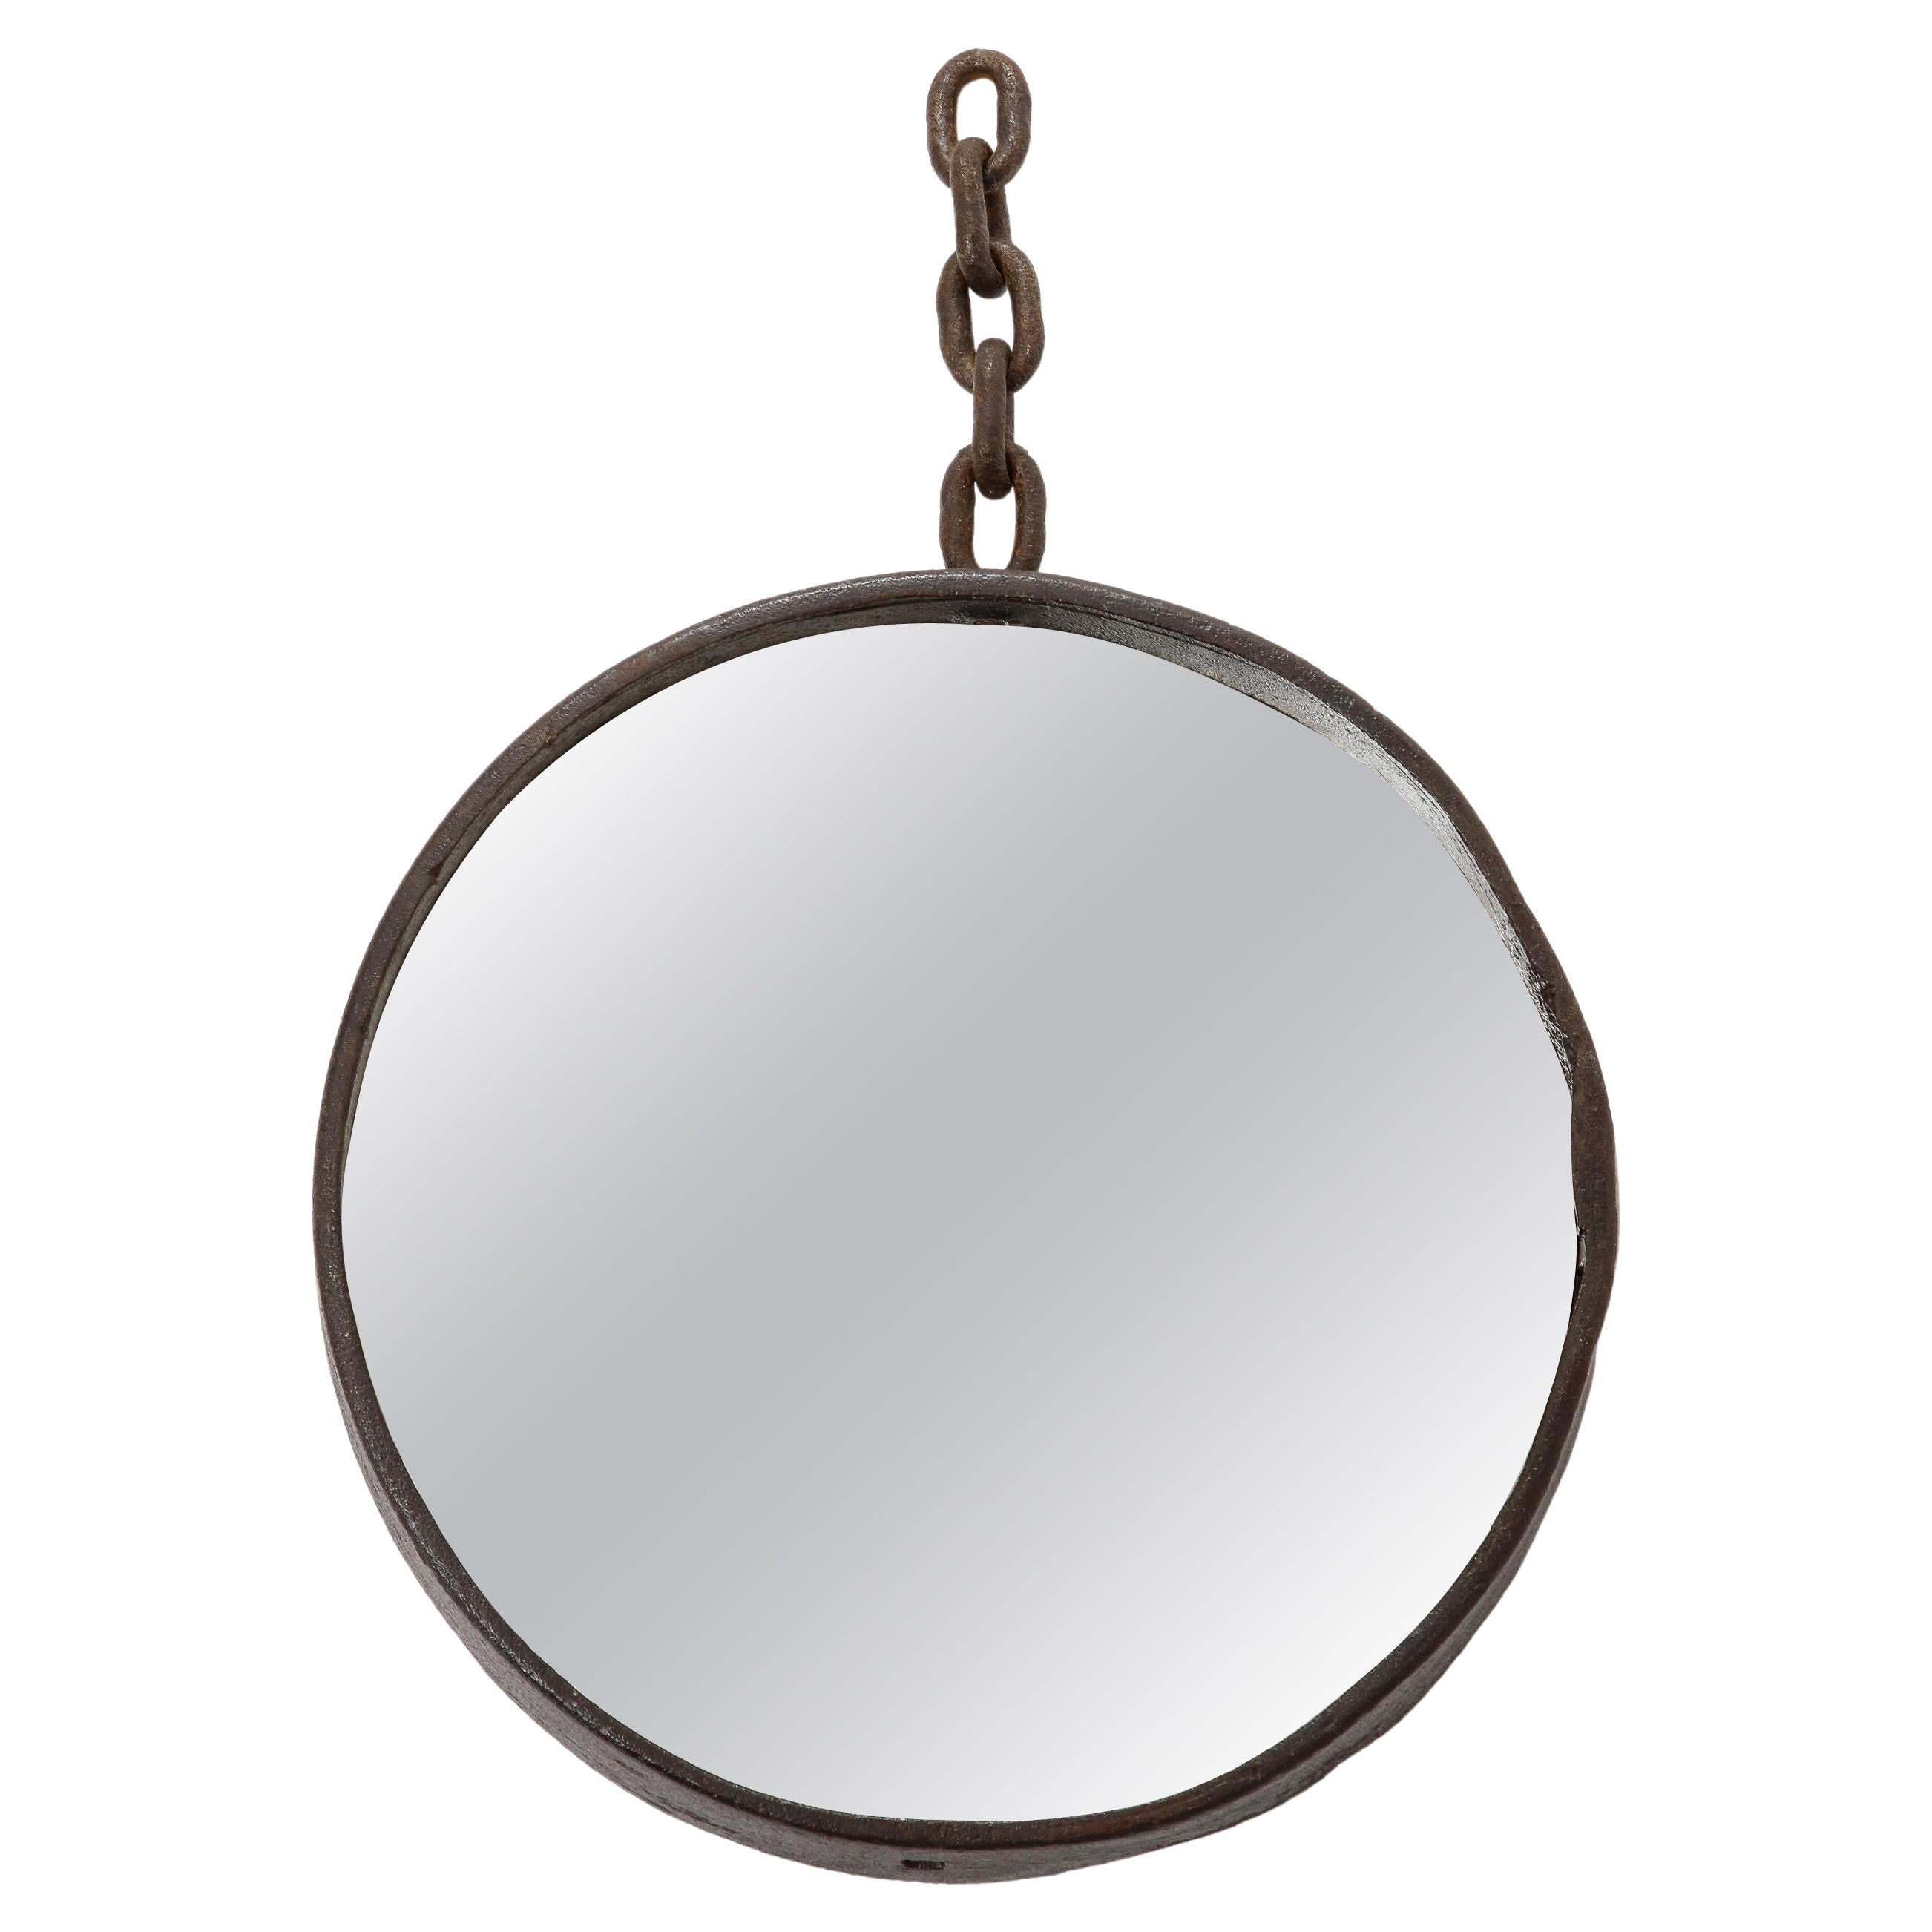 French Iron Round Mirror, C. 1950-60